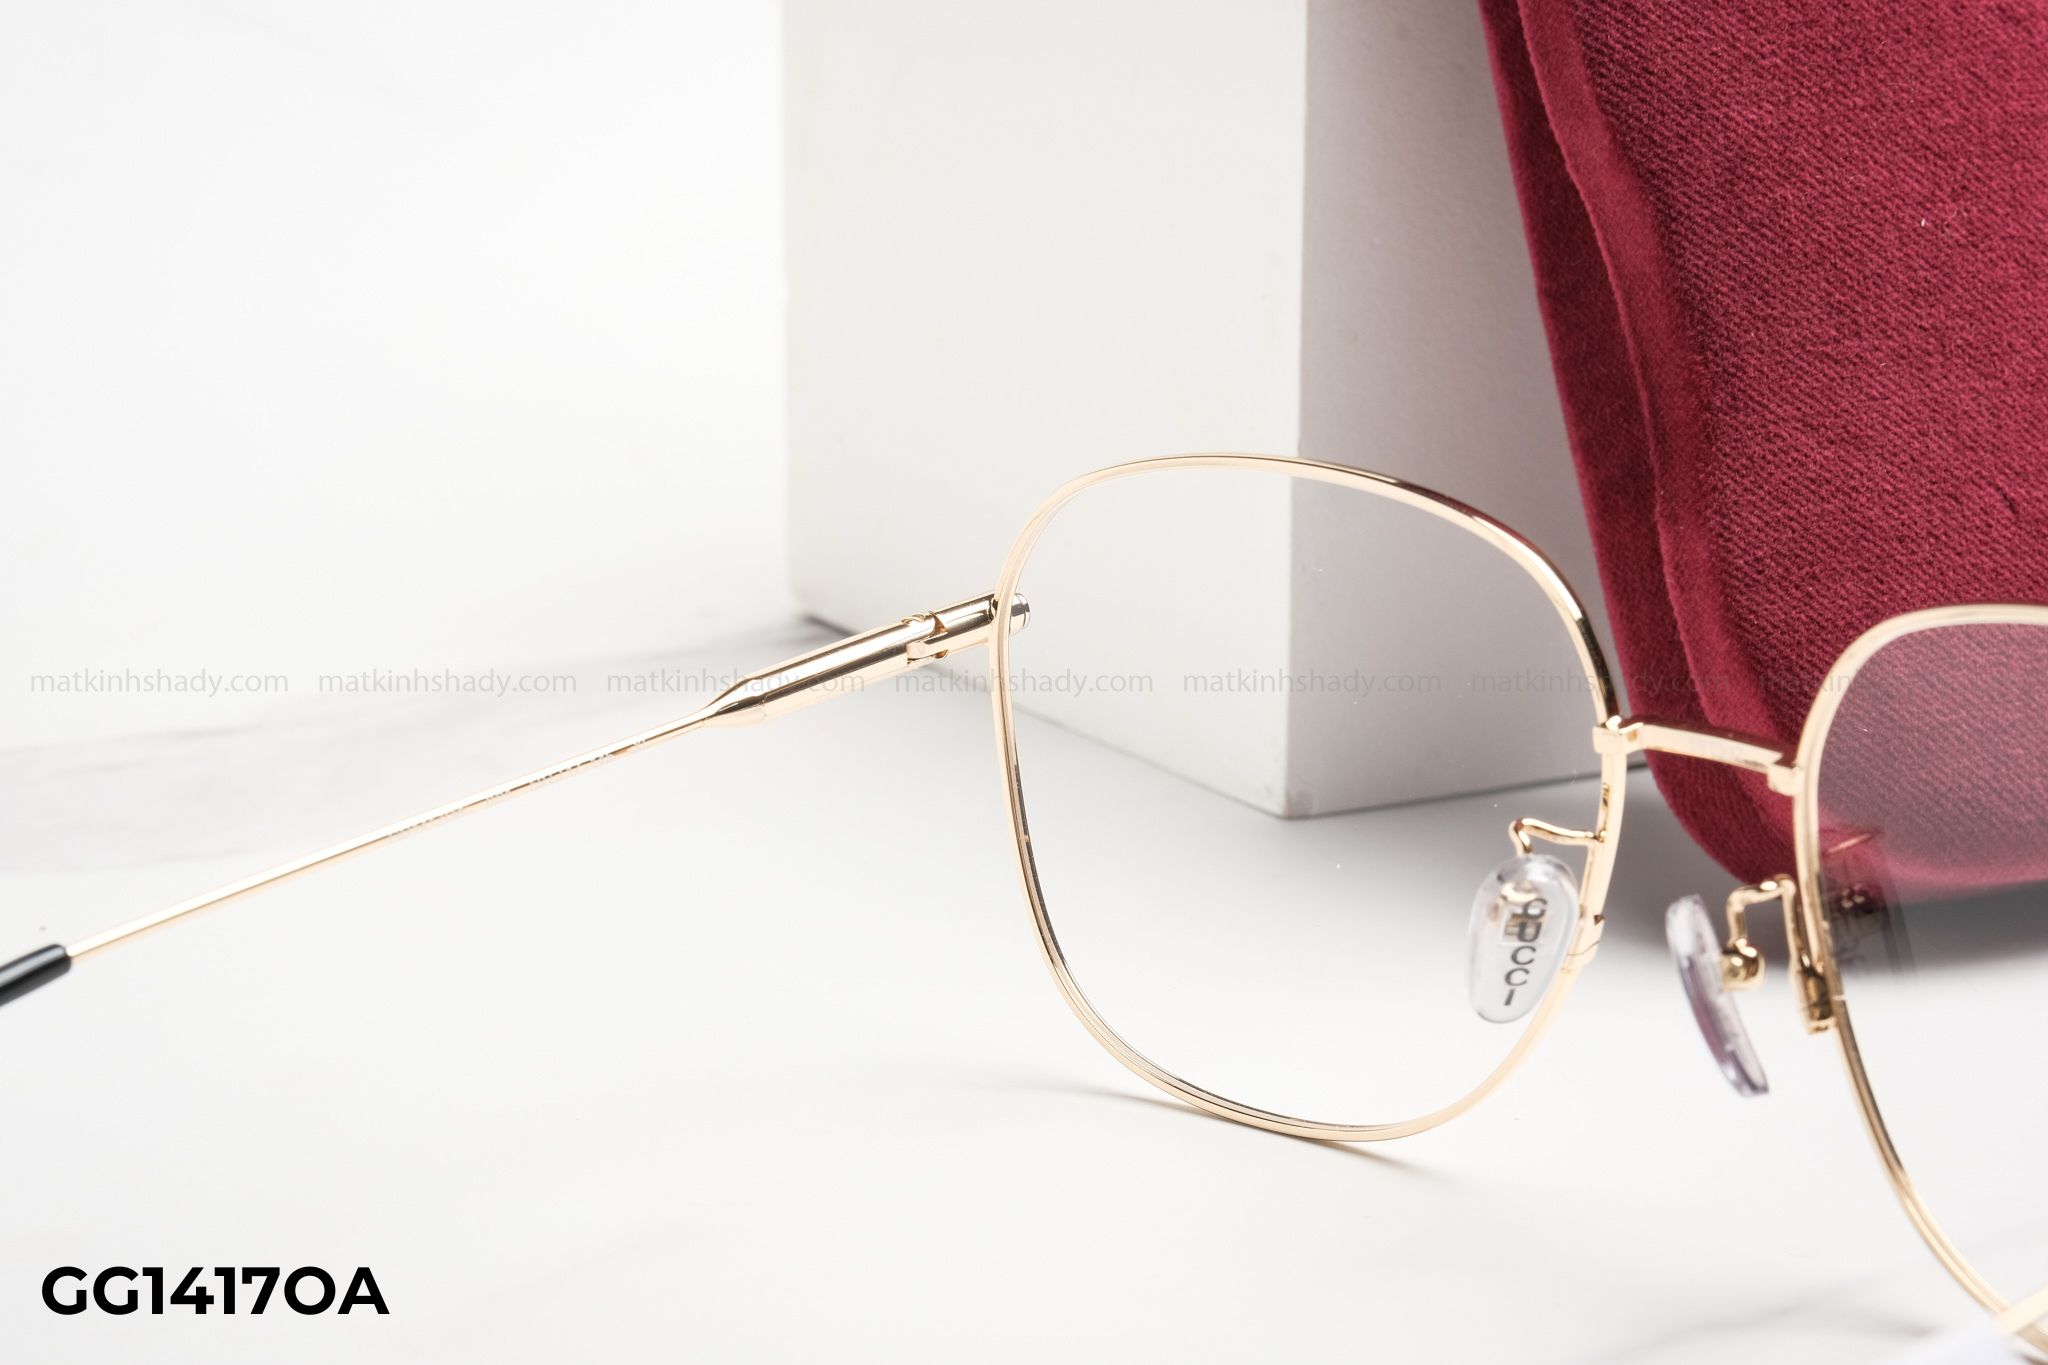  Gucci Eyewear - Glasses - GG1417OA 